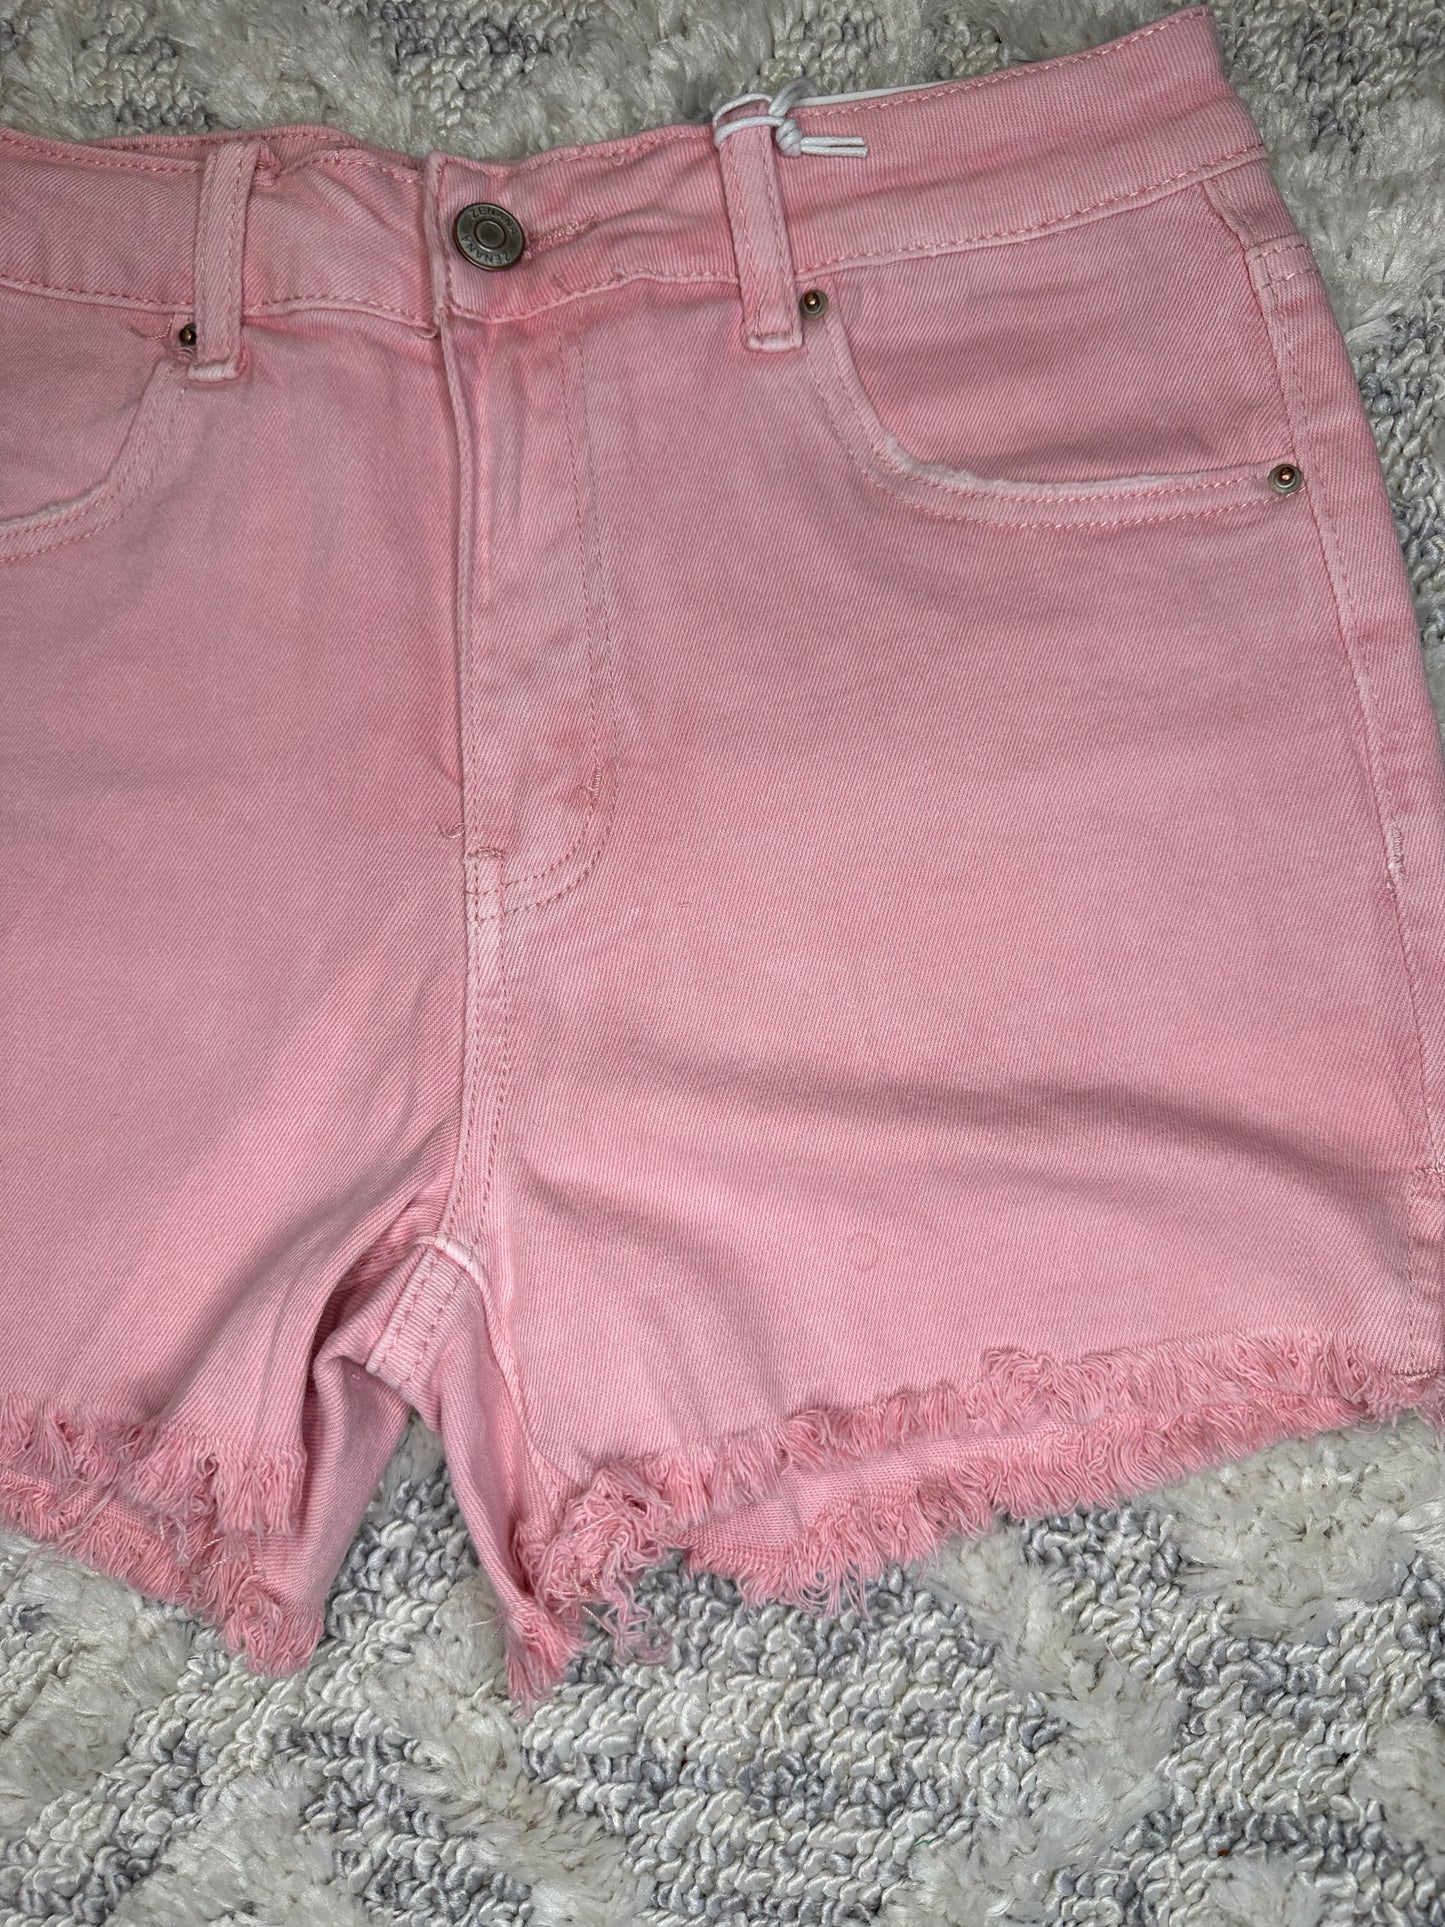 Joplin Acid Washed Shorts- PINK